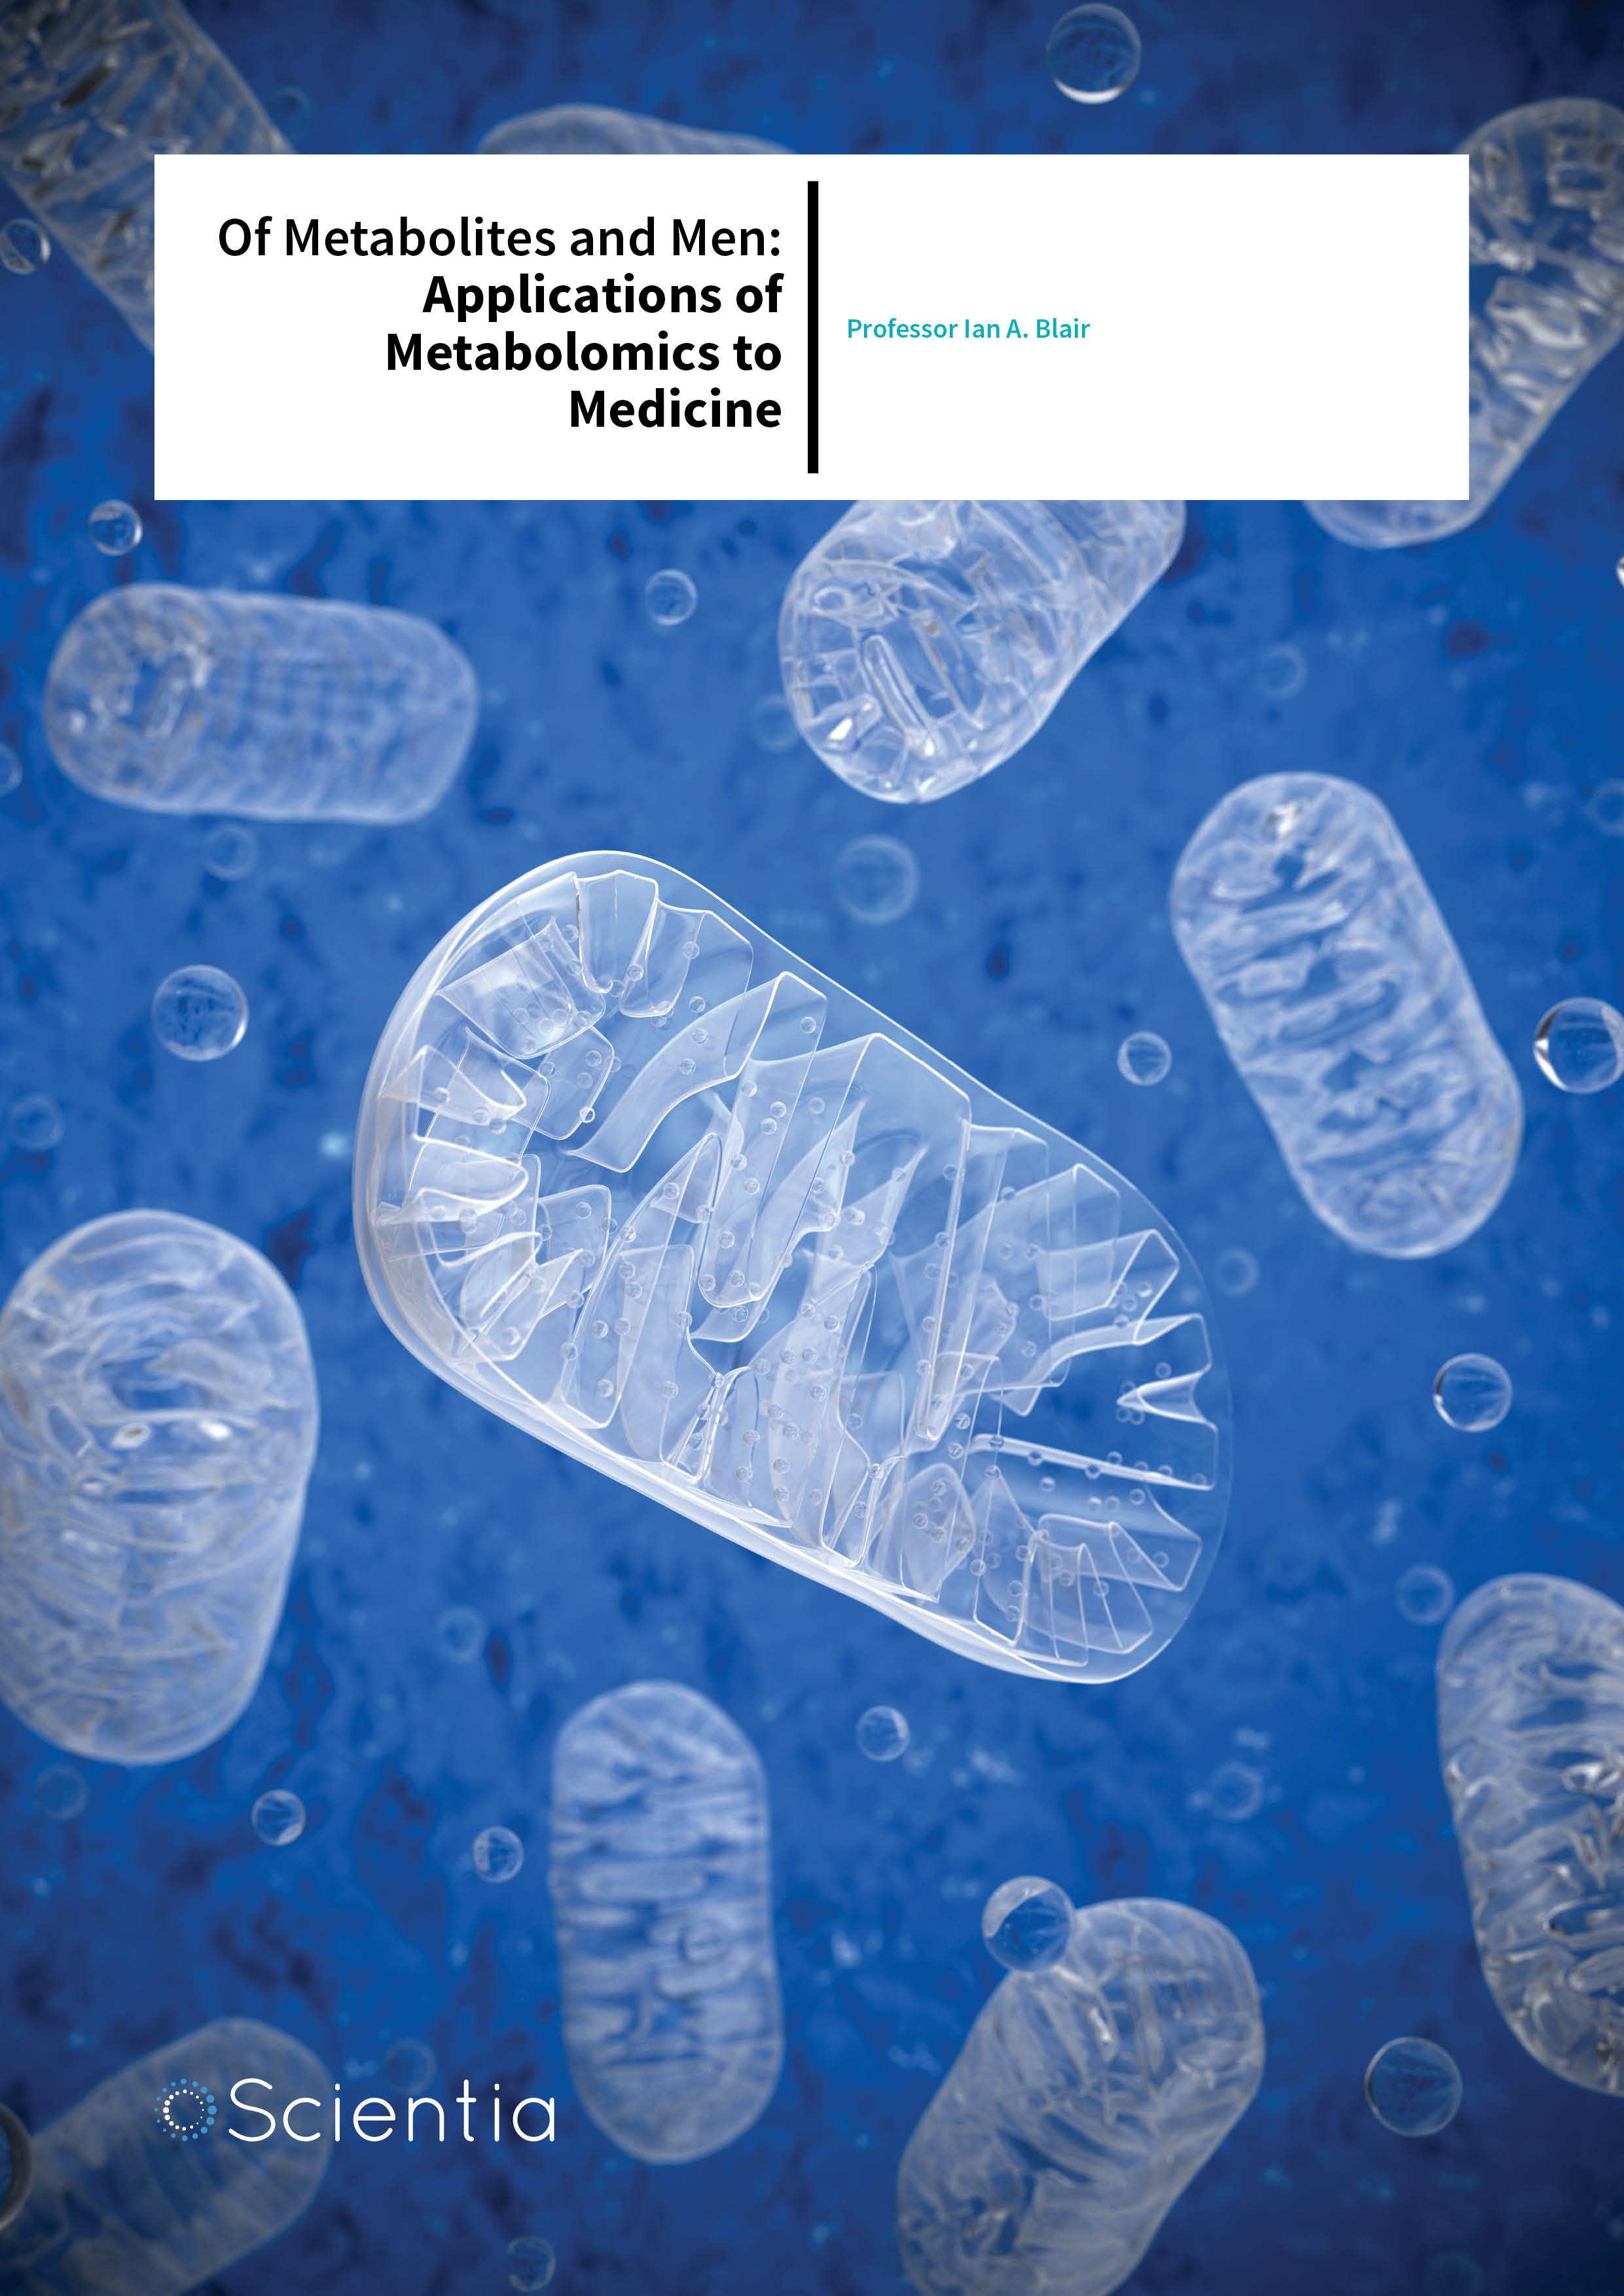 Professor Ian A. Blair – Of Metabolites and Men: Applications of Metabolomics to Medicine